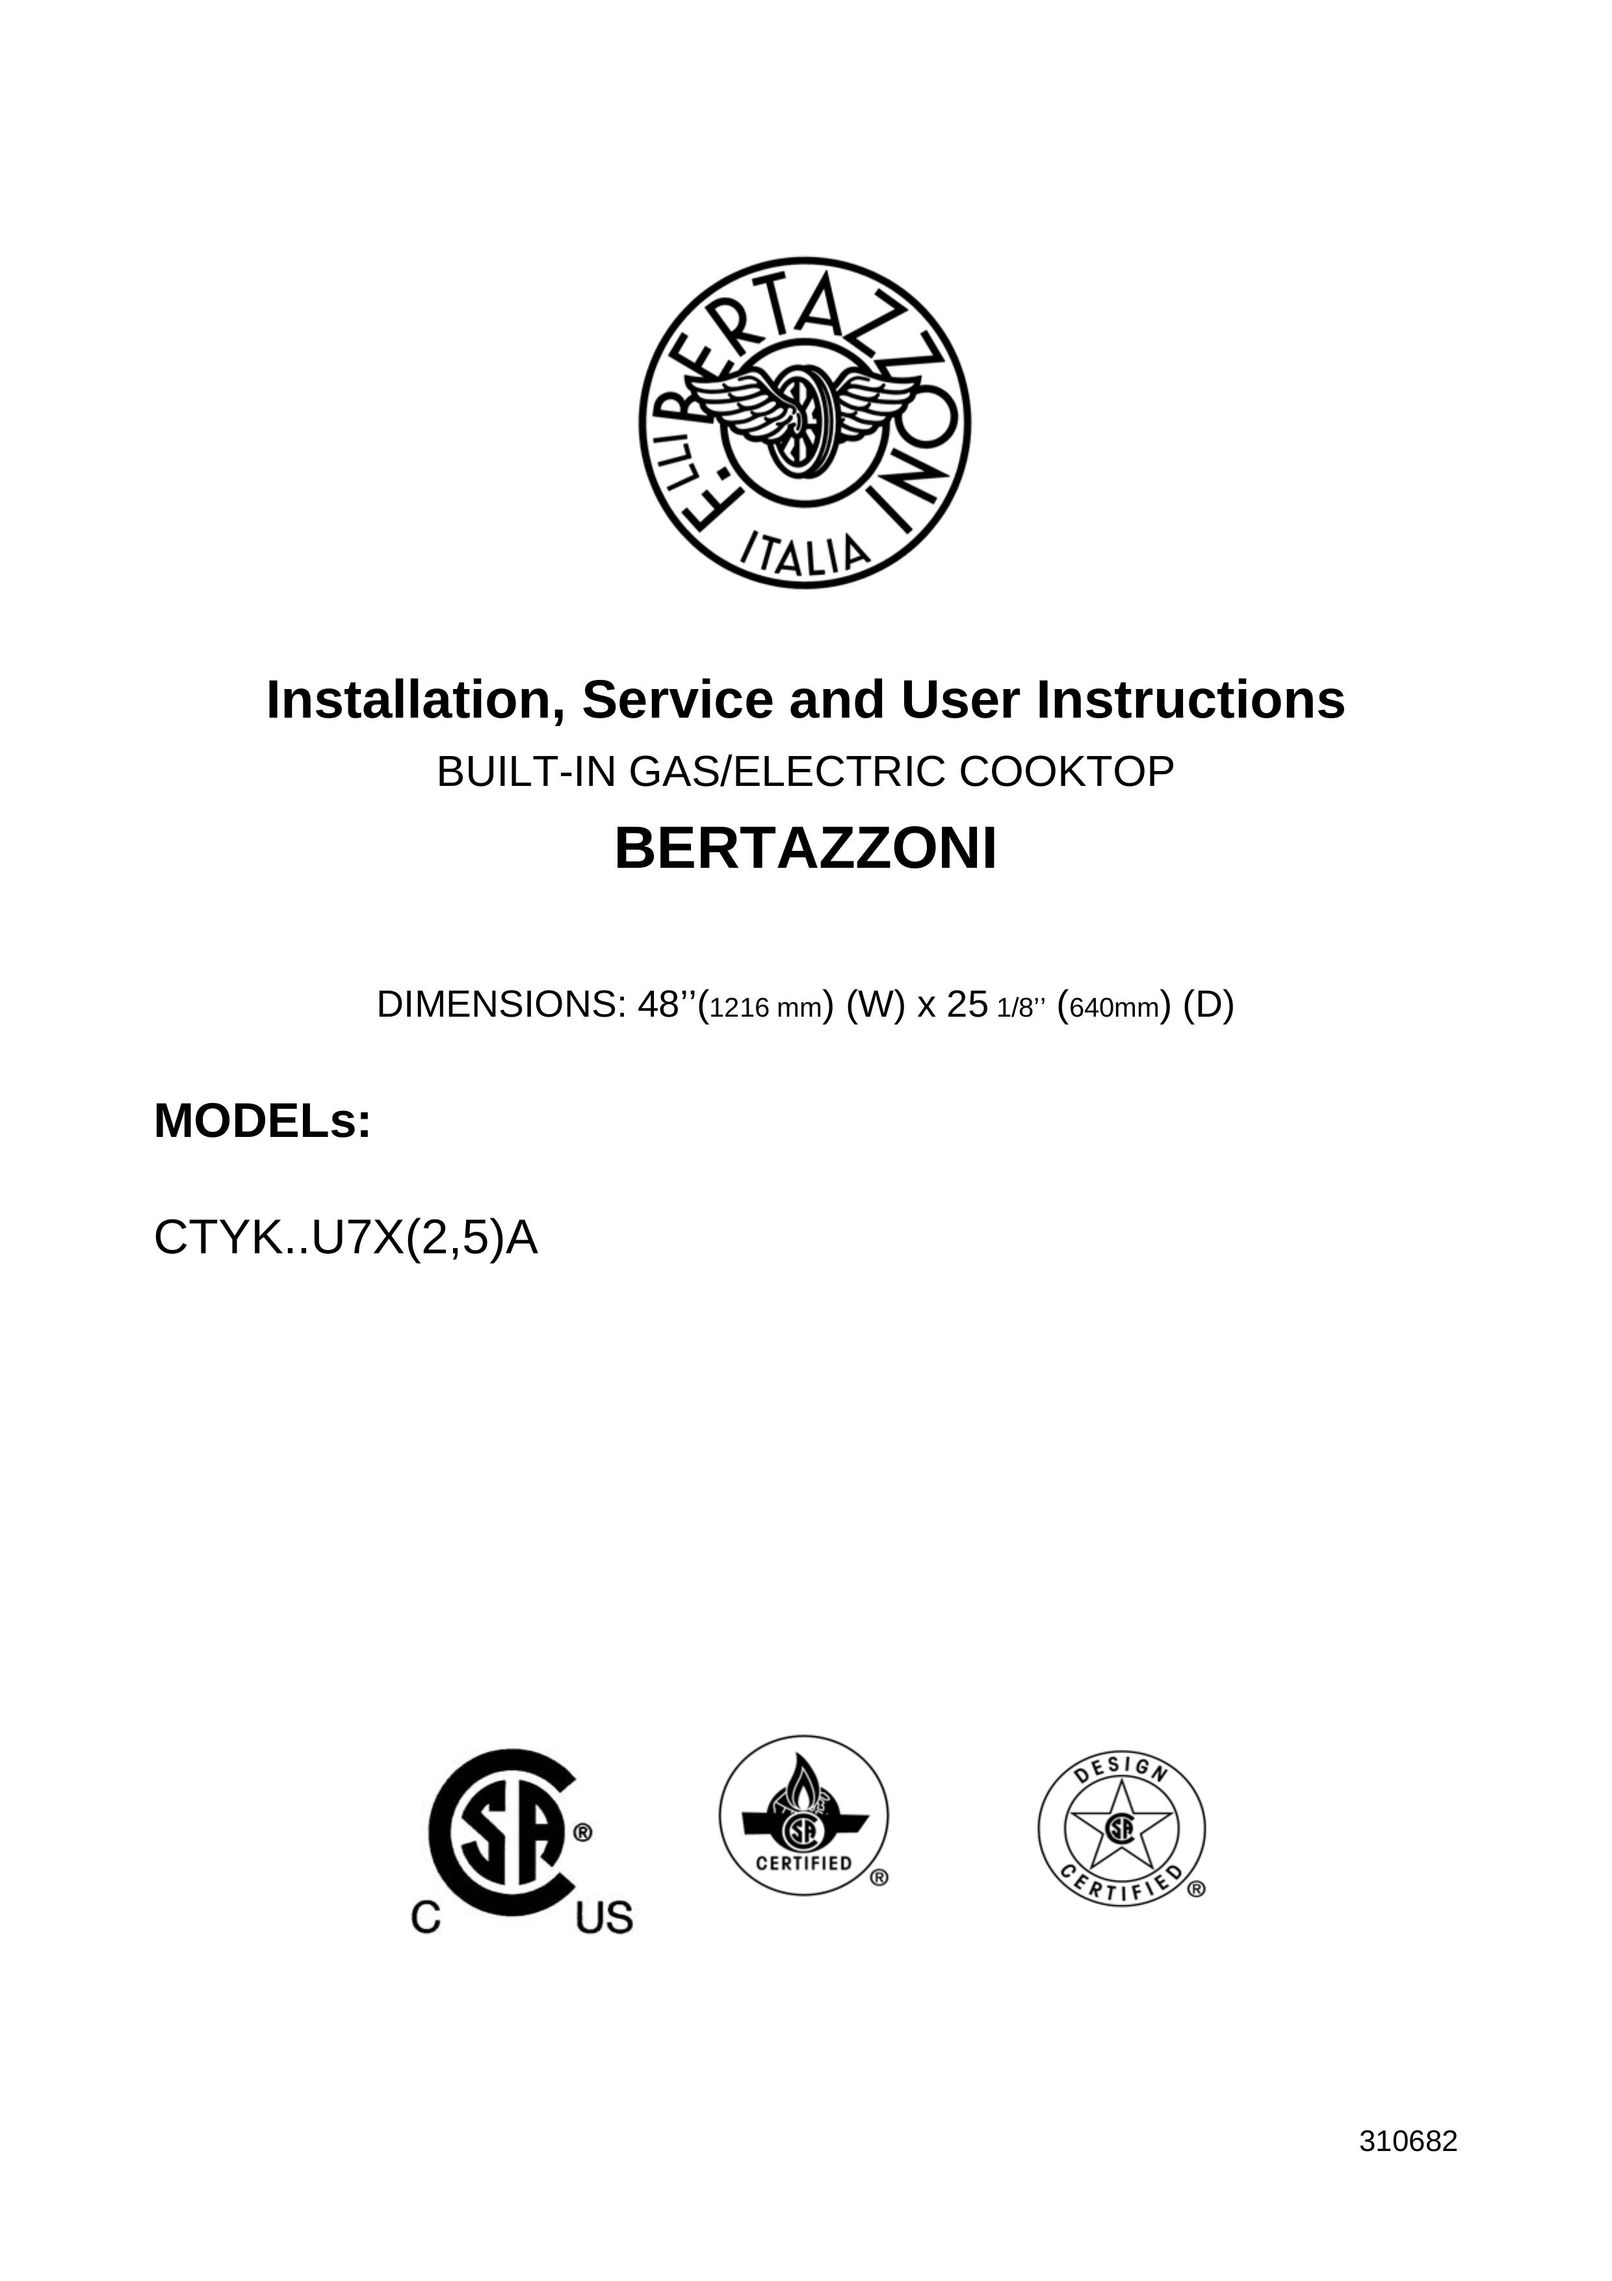 Bertazzoni CTYK..U7X(2,5)A Cooktop User Manual